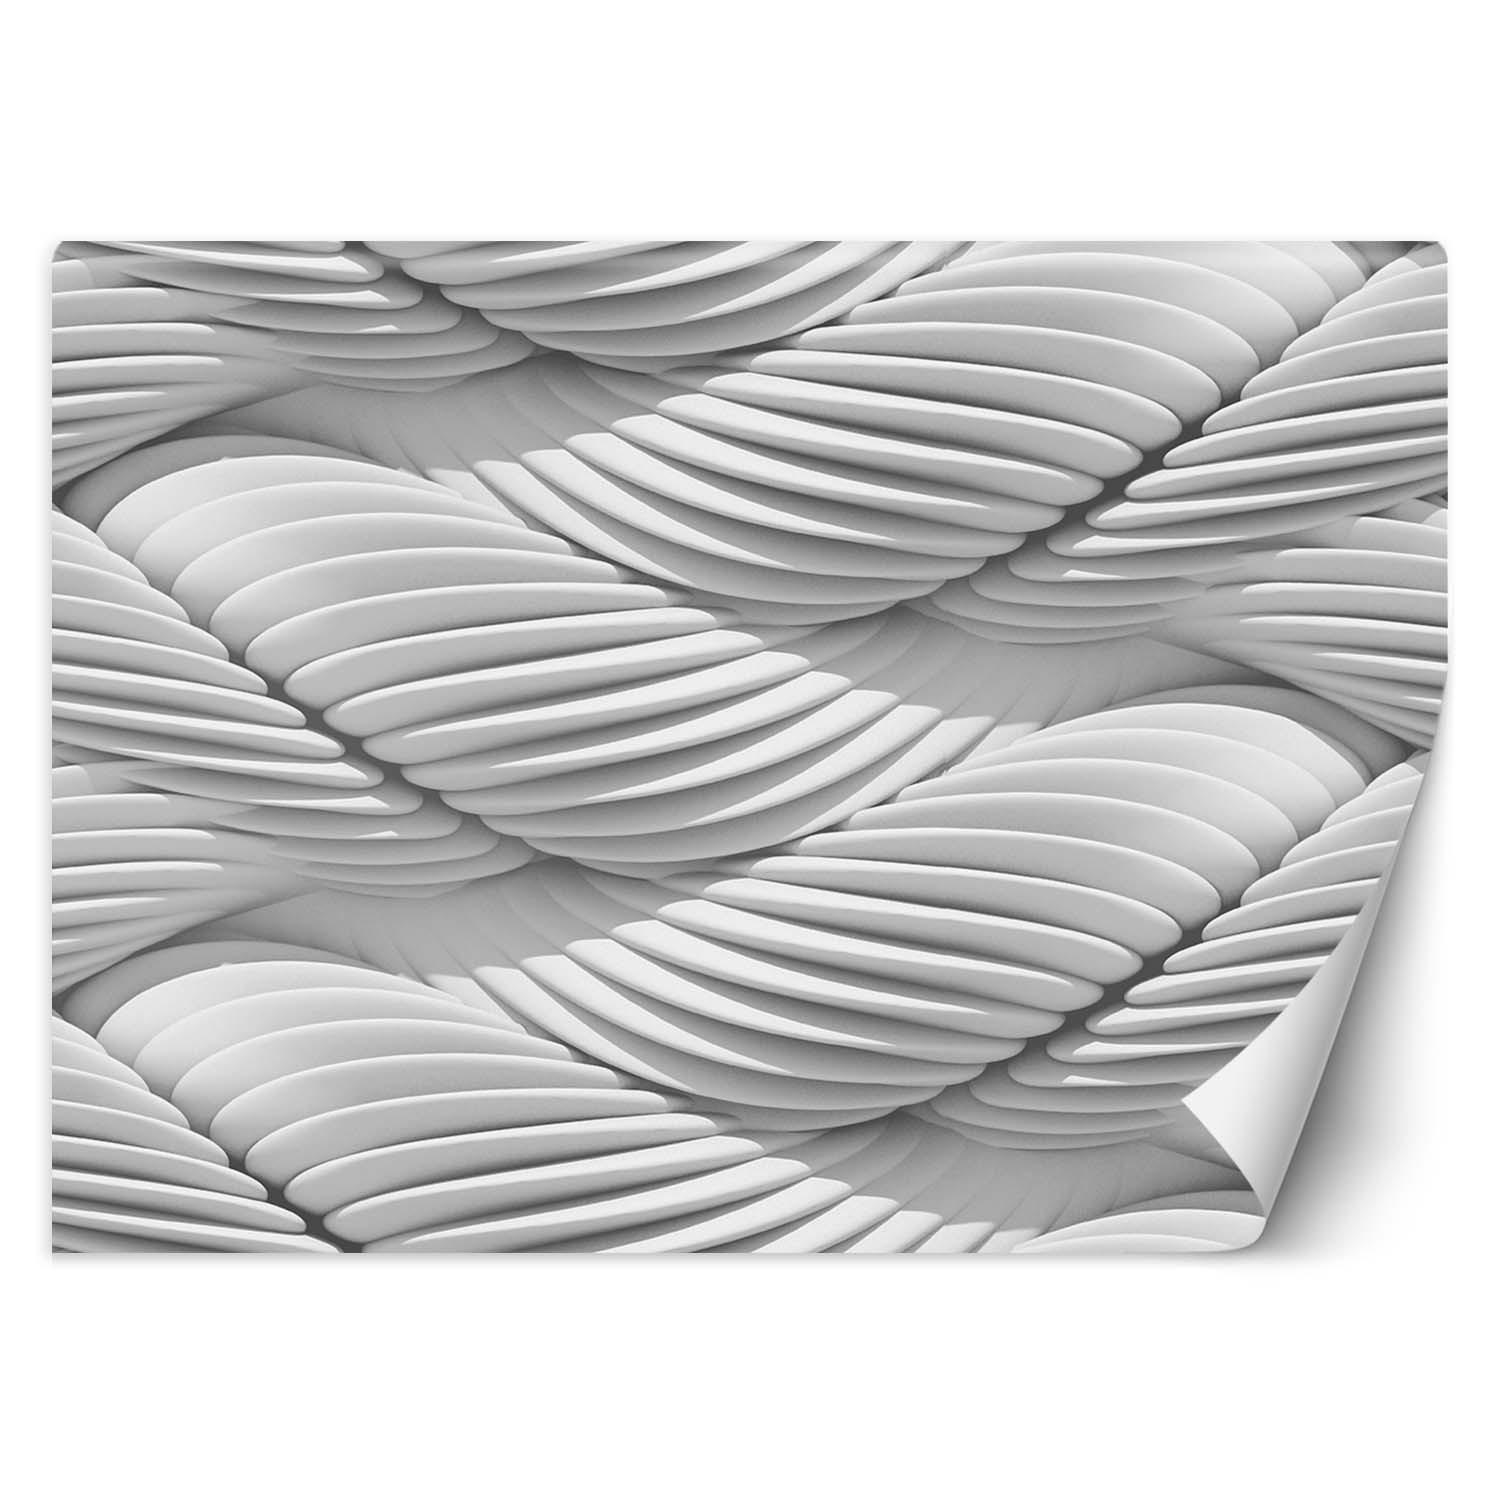 Trend24 – Behang – Abstracte Golven 3D – Behangpapier – Fotobehang 3D – Behang Woonkamer – 200x140x2 cm – Incl. behanglijm